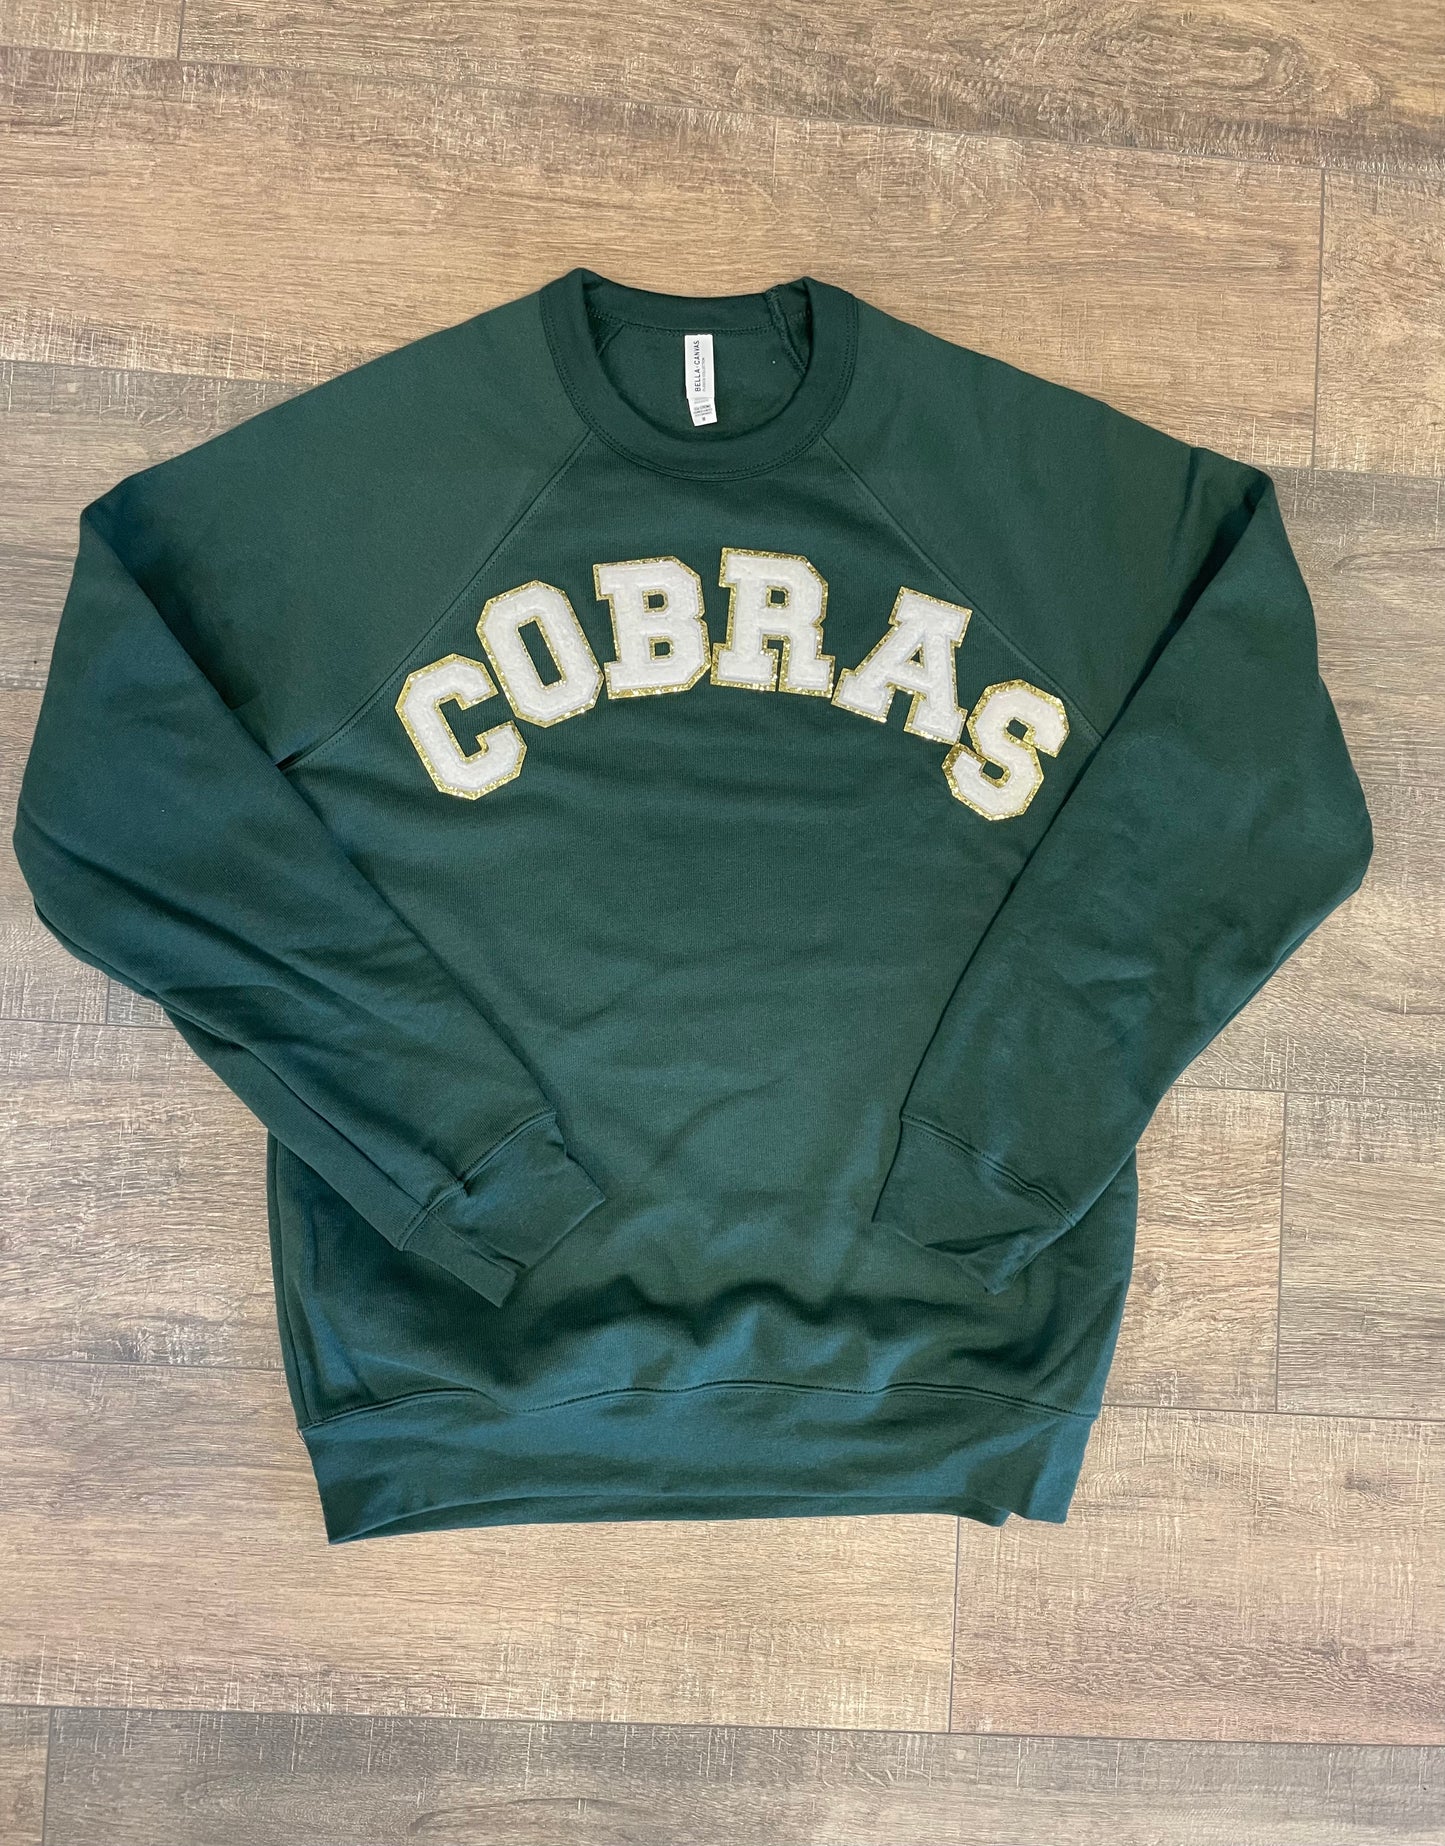 COBRAS patch sweatshirt- Jackson Heights